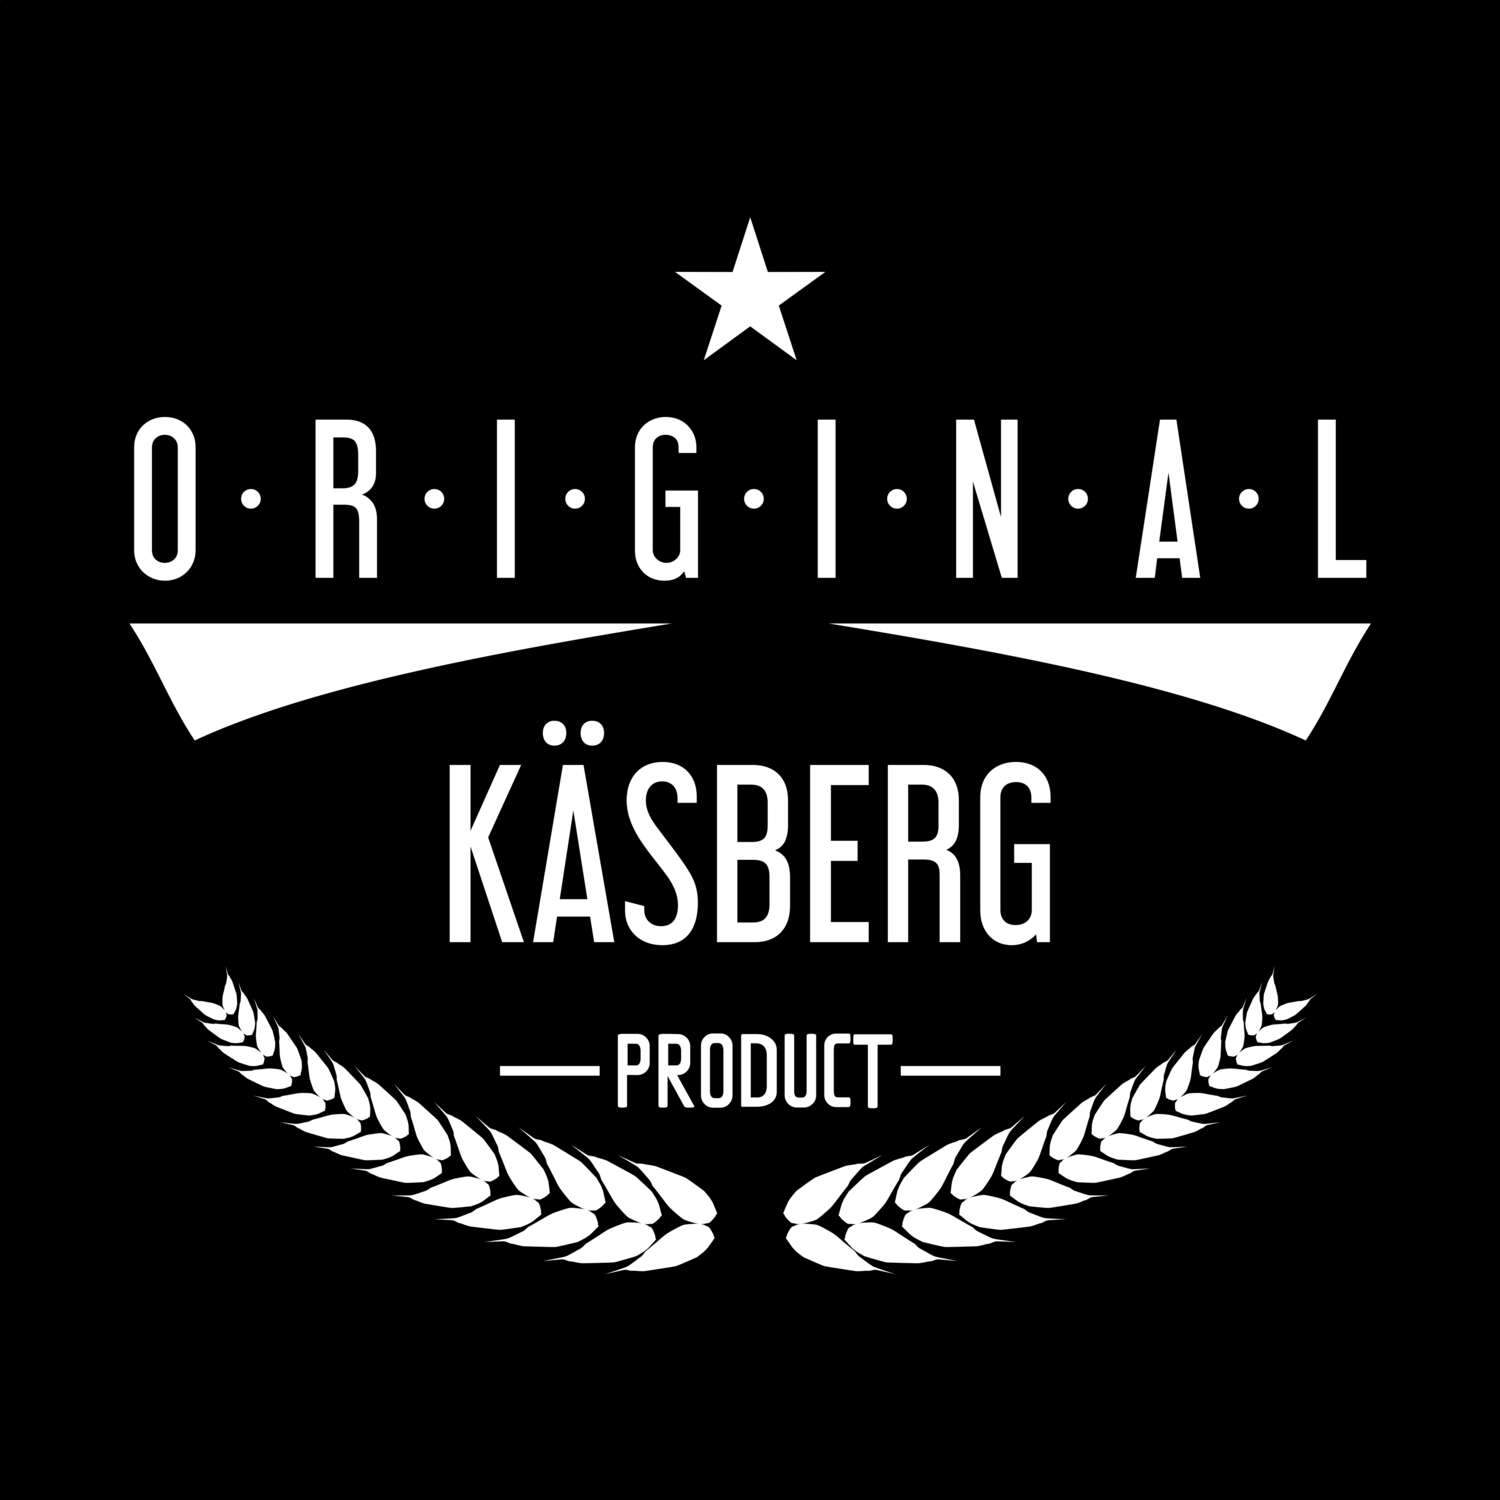 Käsberg T-Shirt »Original Product«